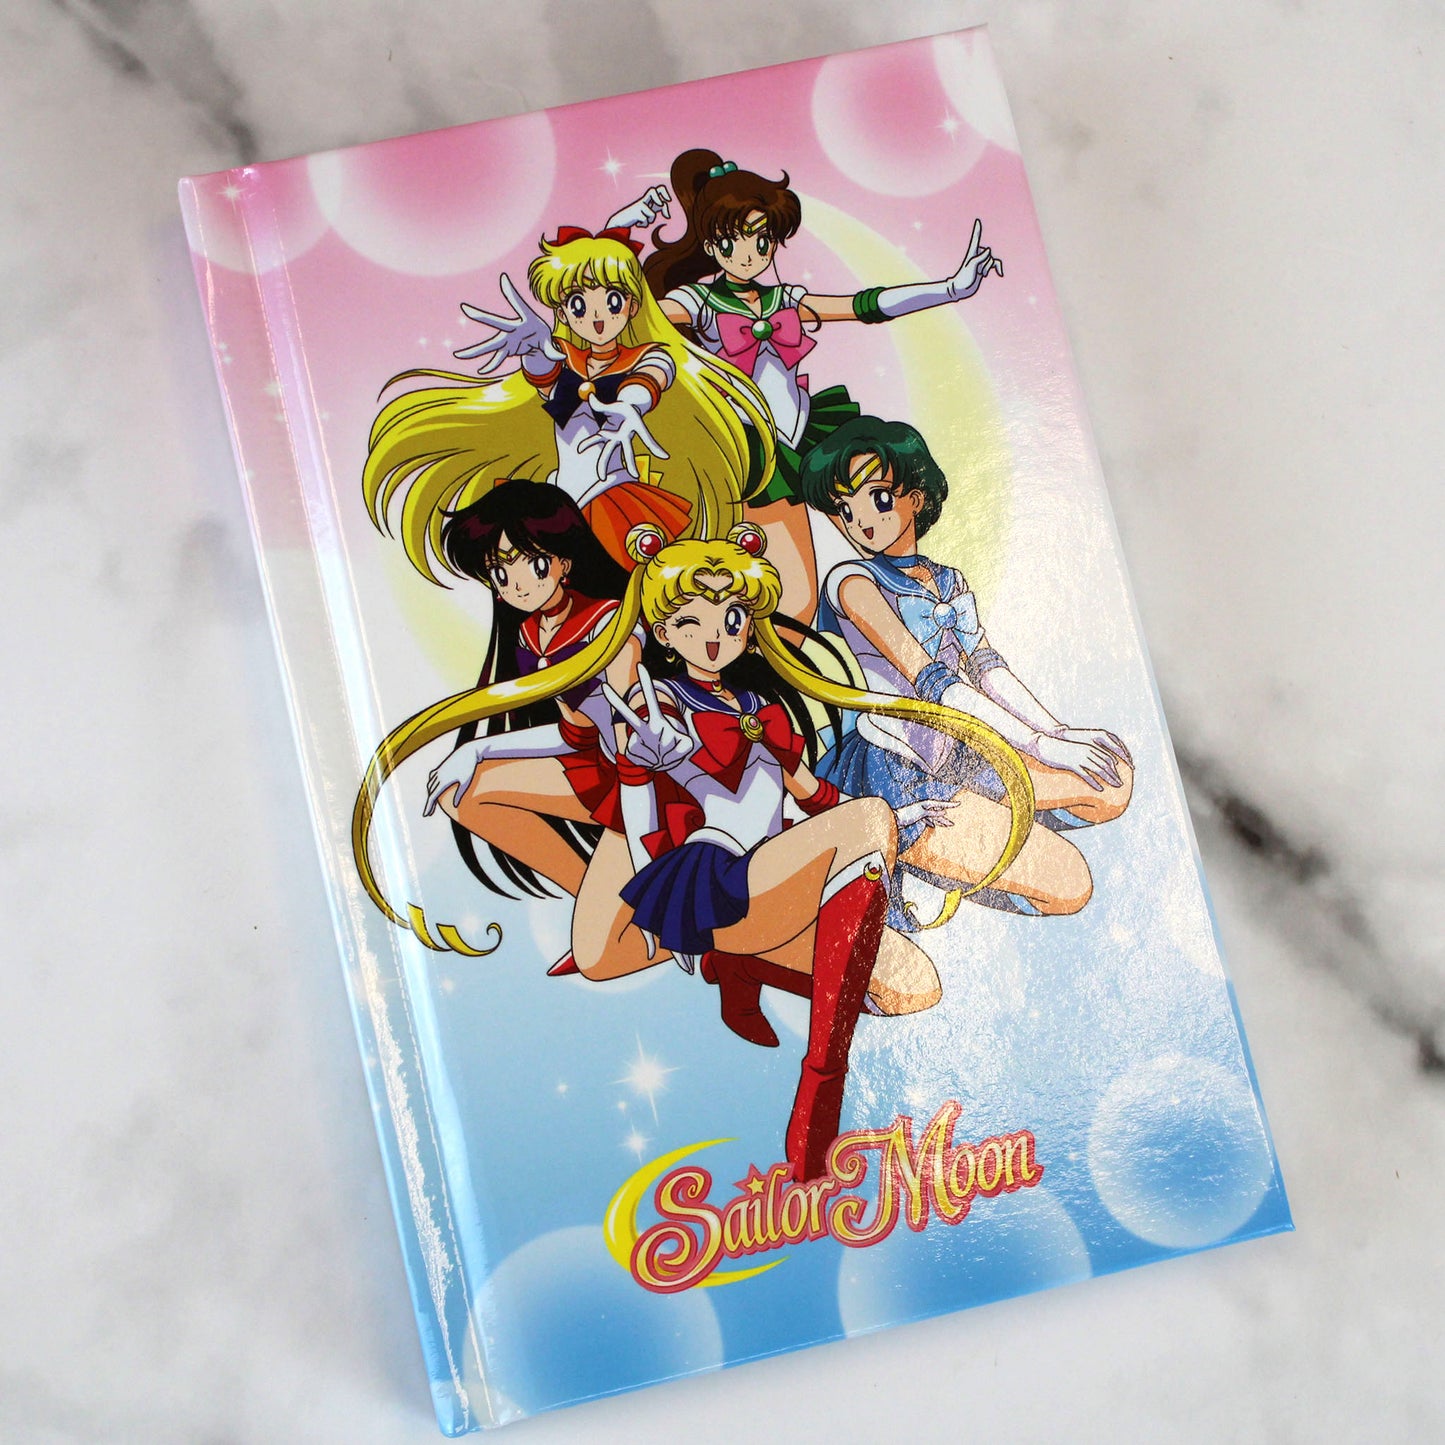 Sailor Moon Journal, Keychain, & Ceramic Mug Gift Set